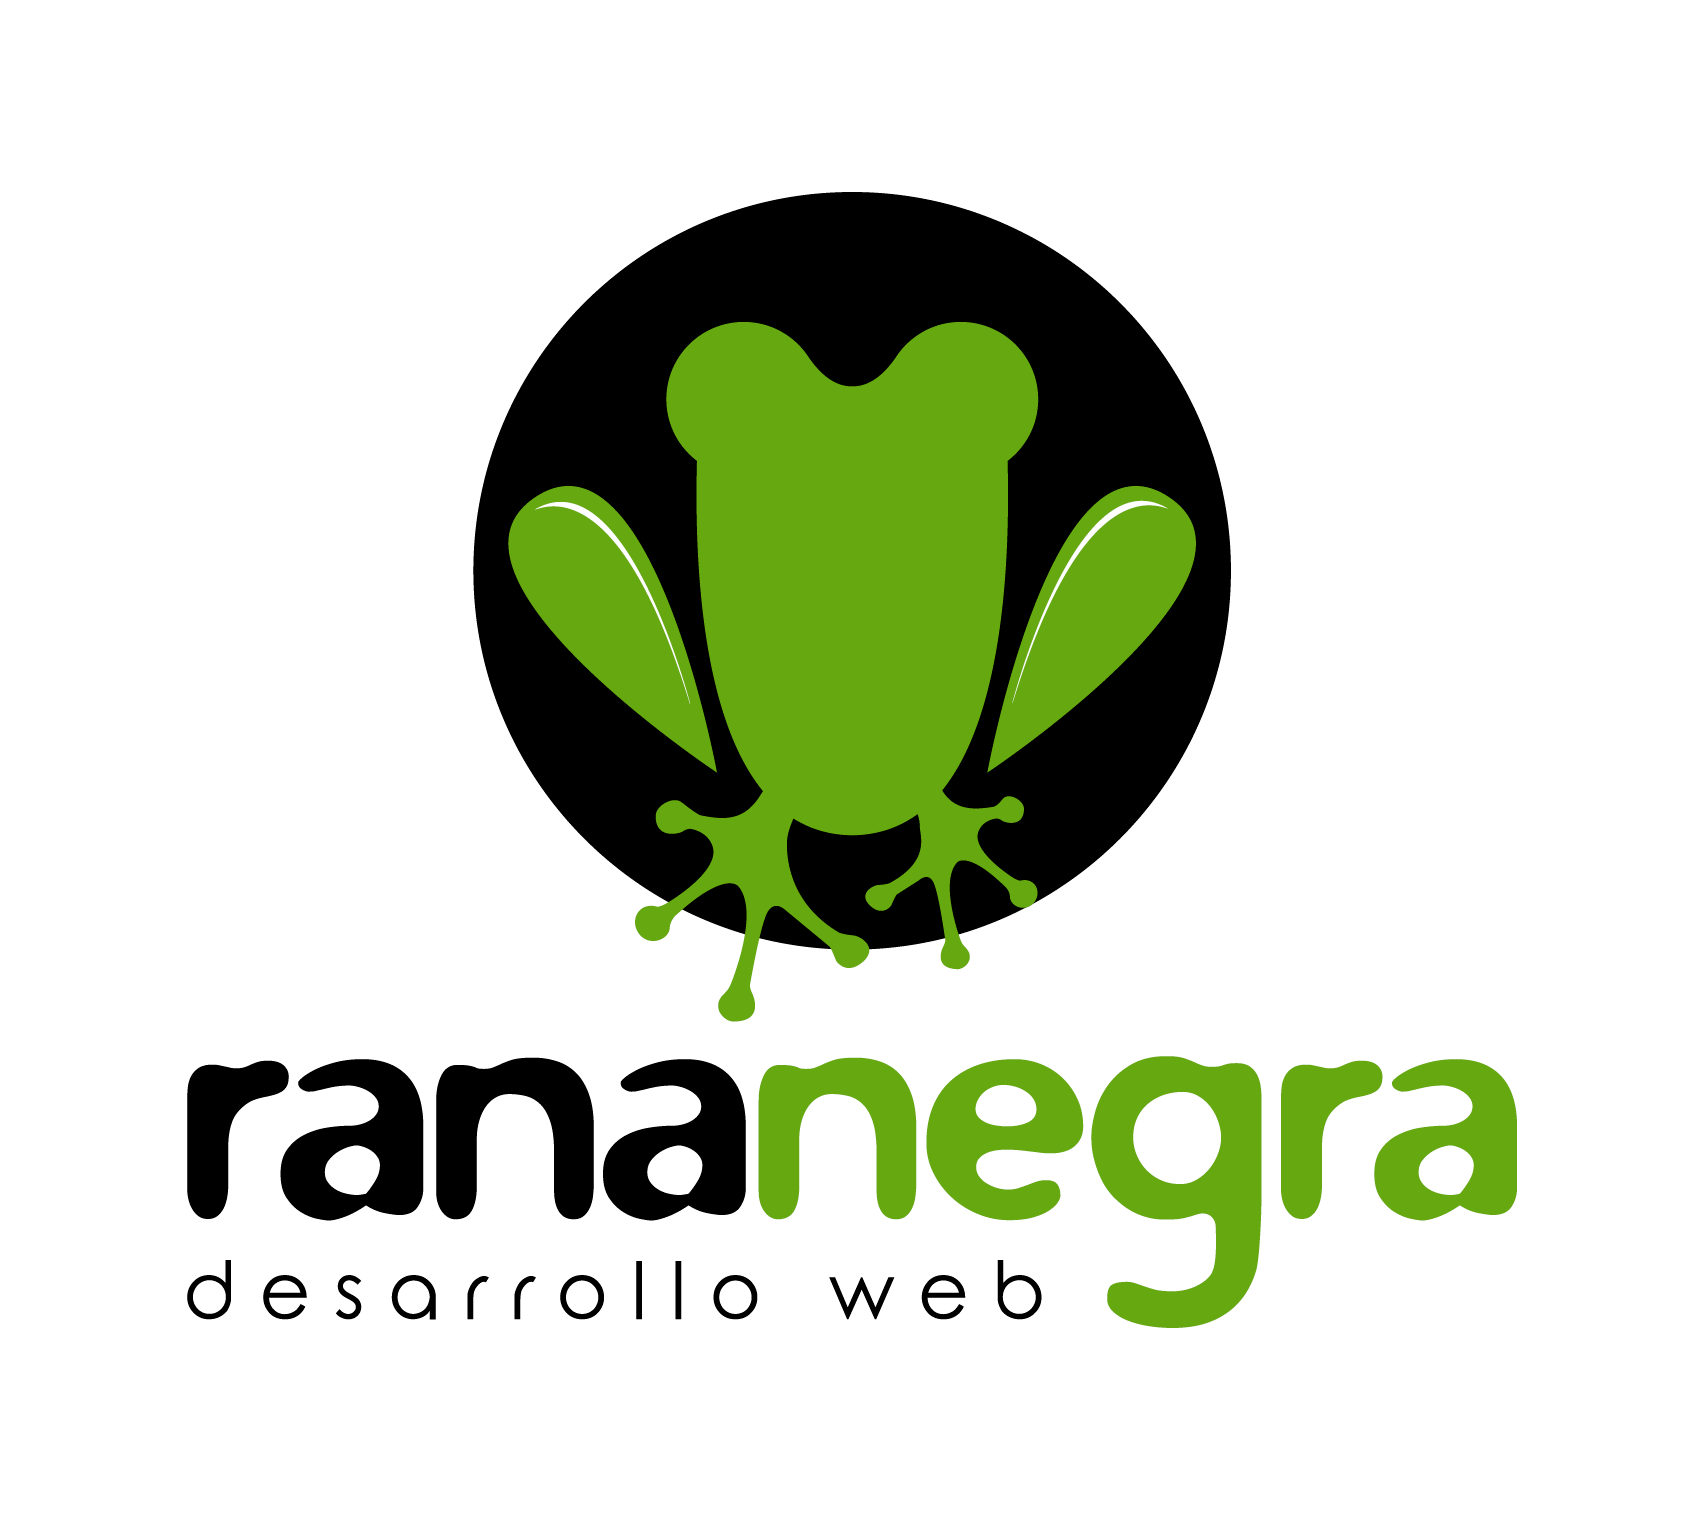 (c) Rananegra.es